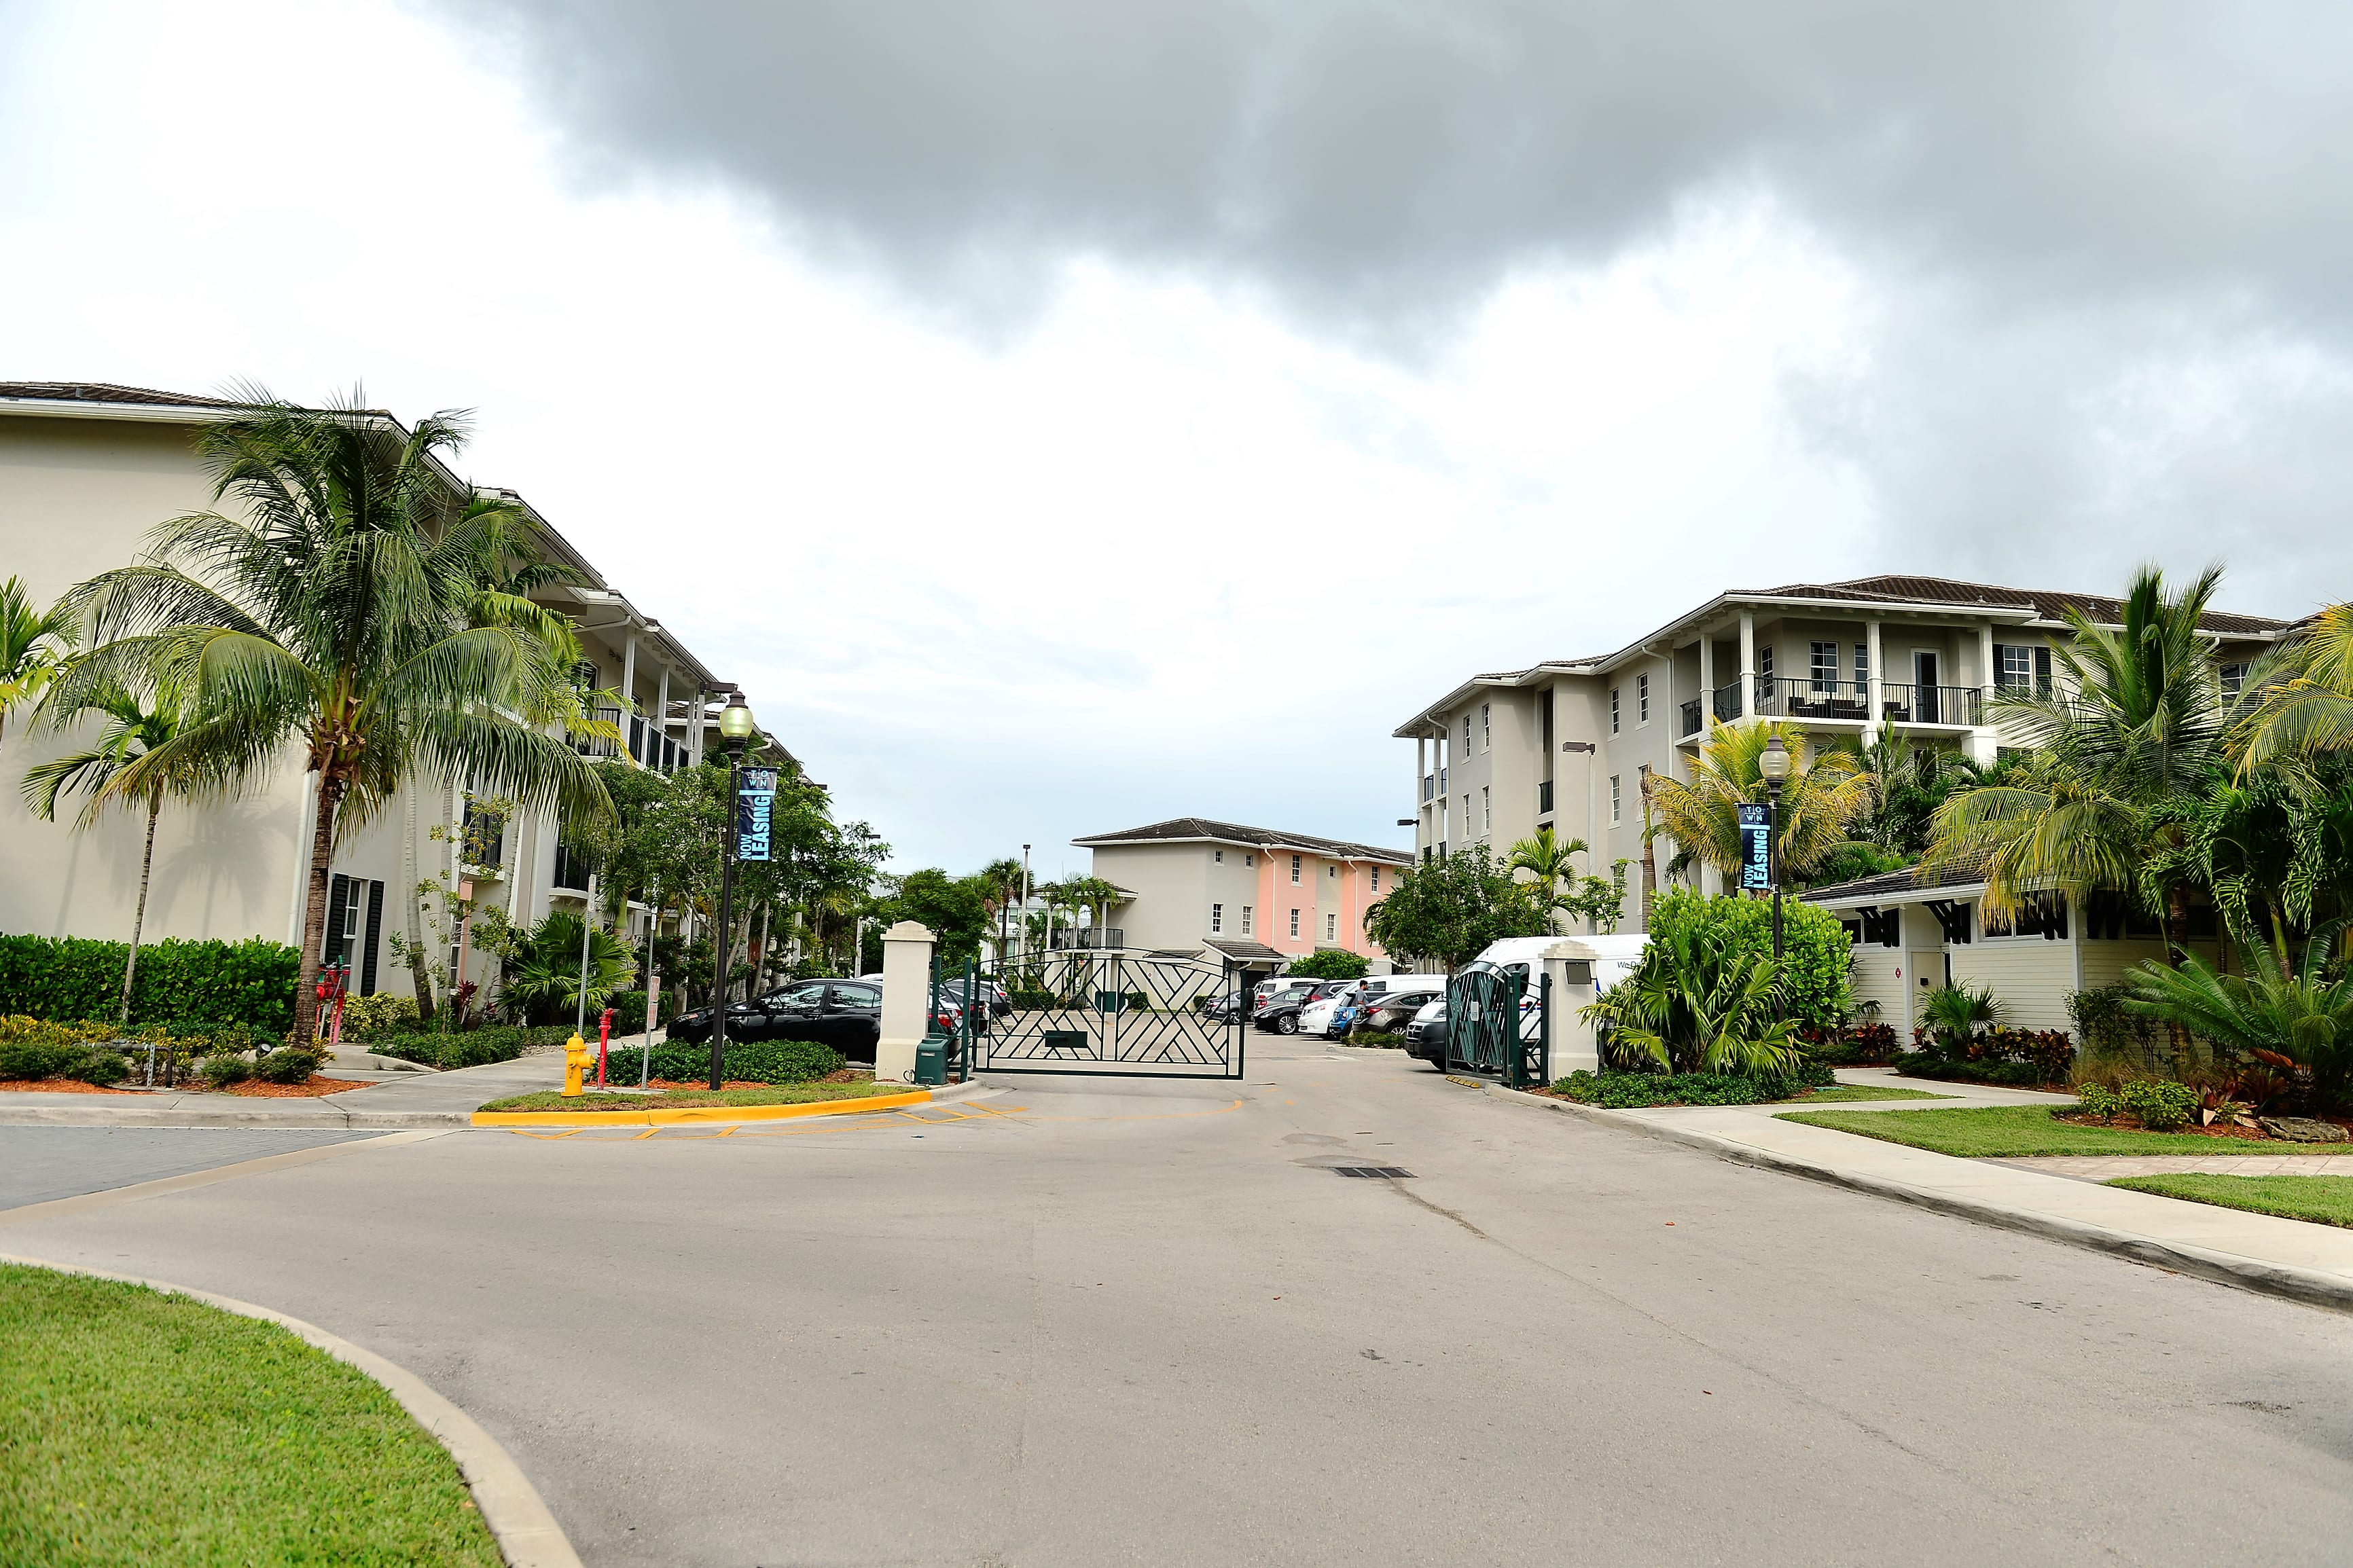 South Florida’s Pembroke Pines Approves Affordable Housing Development